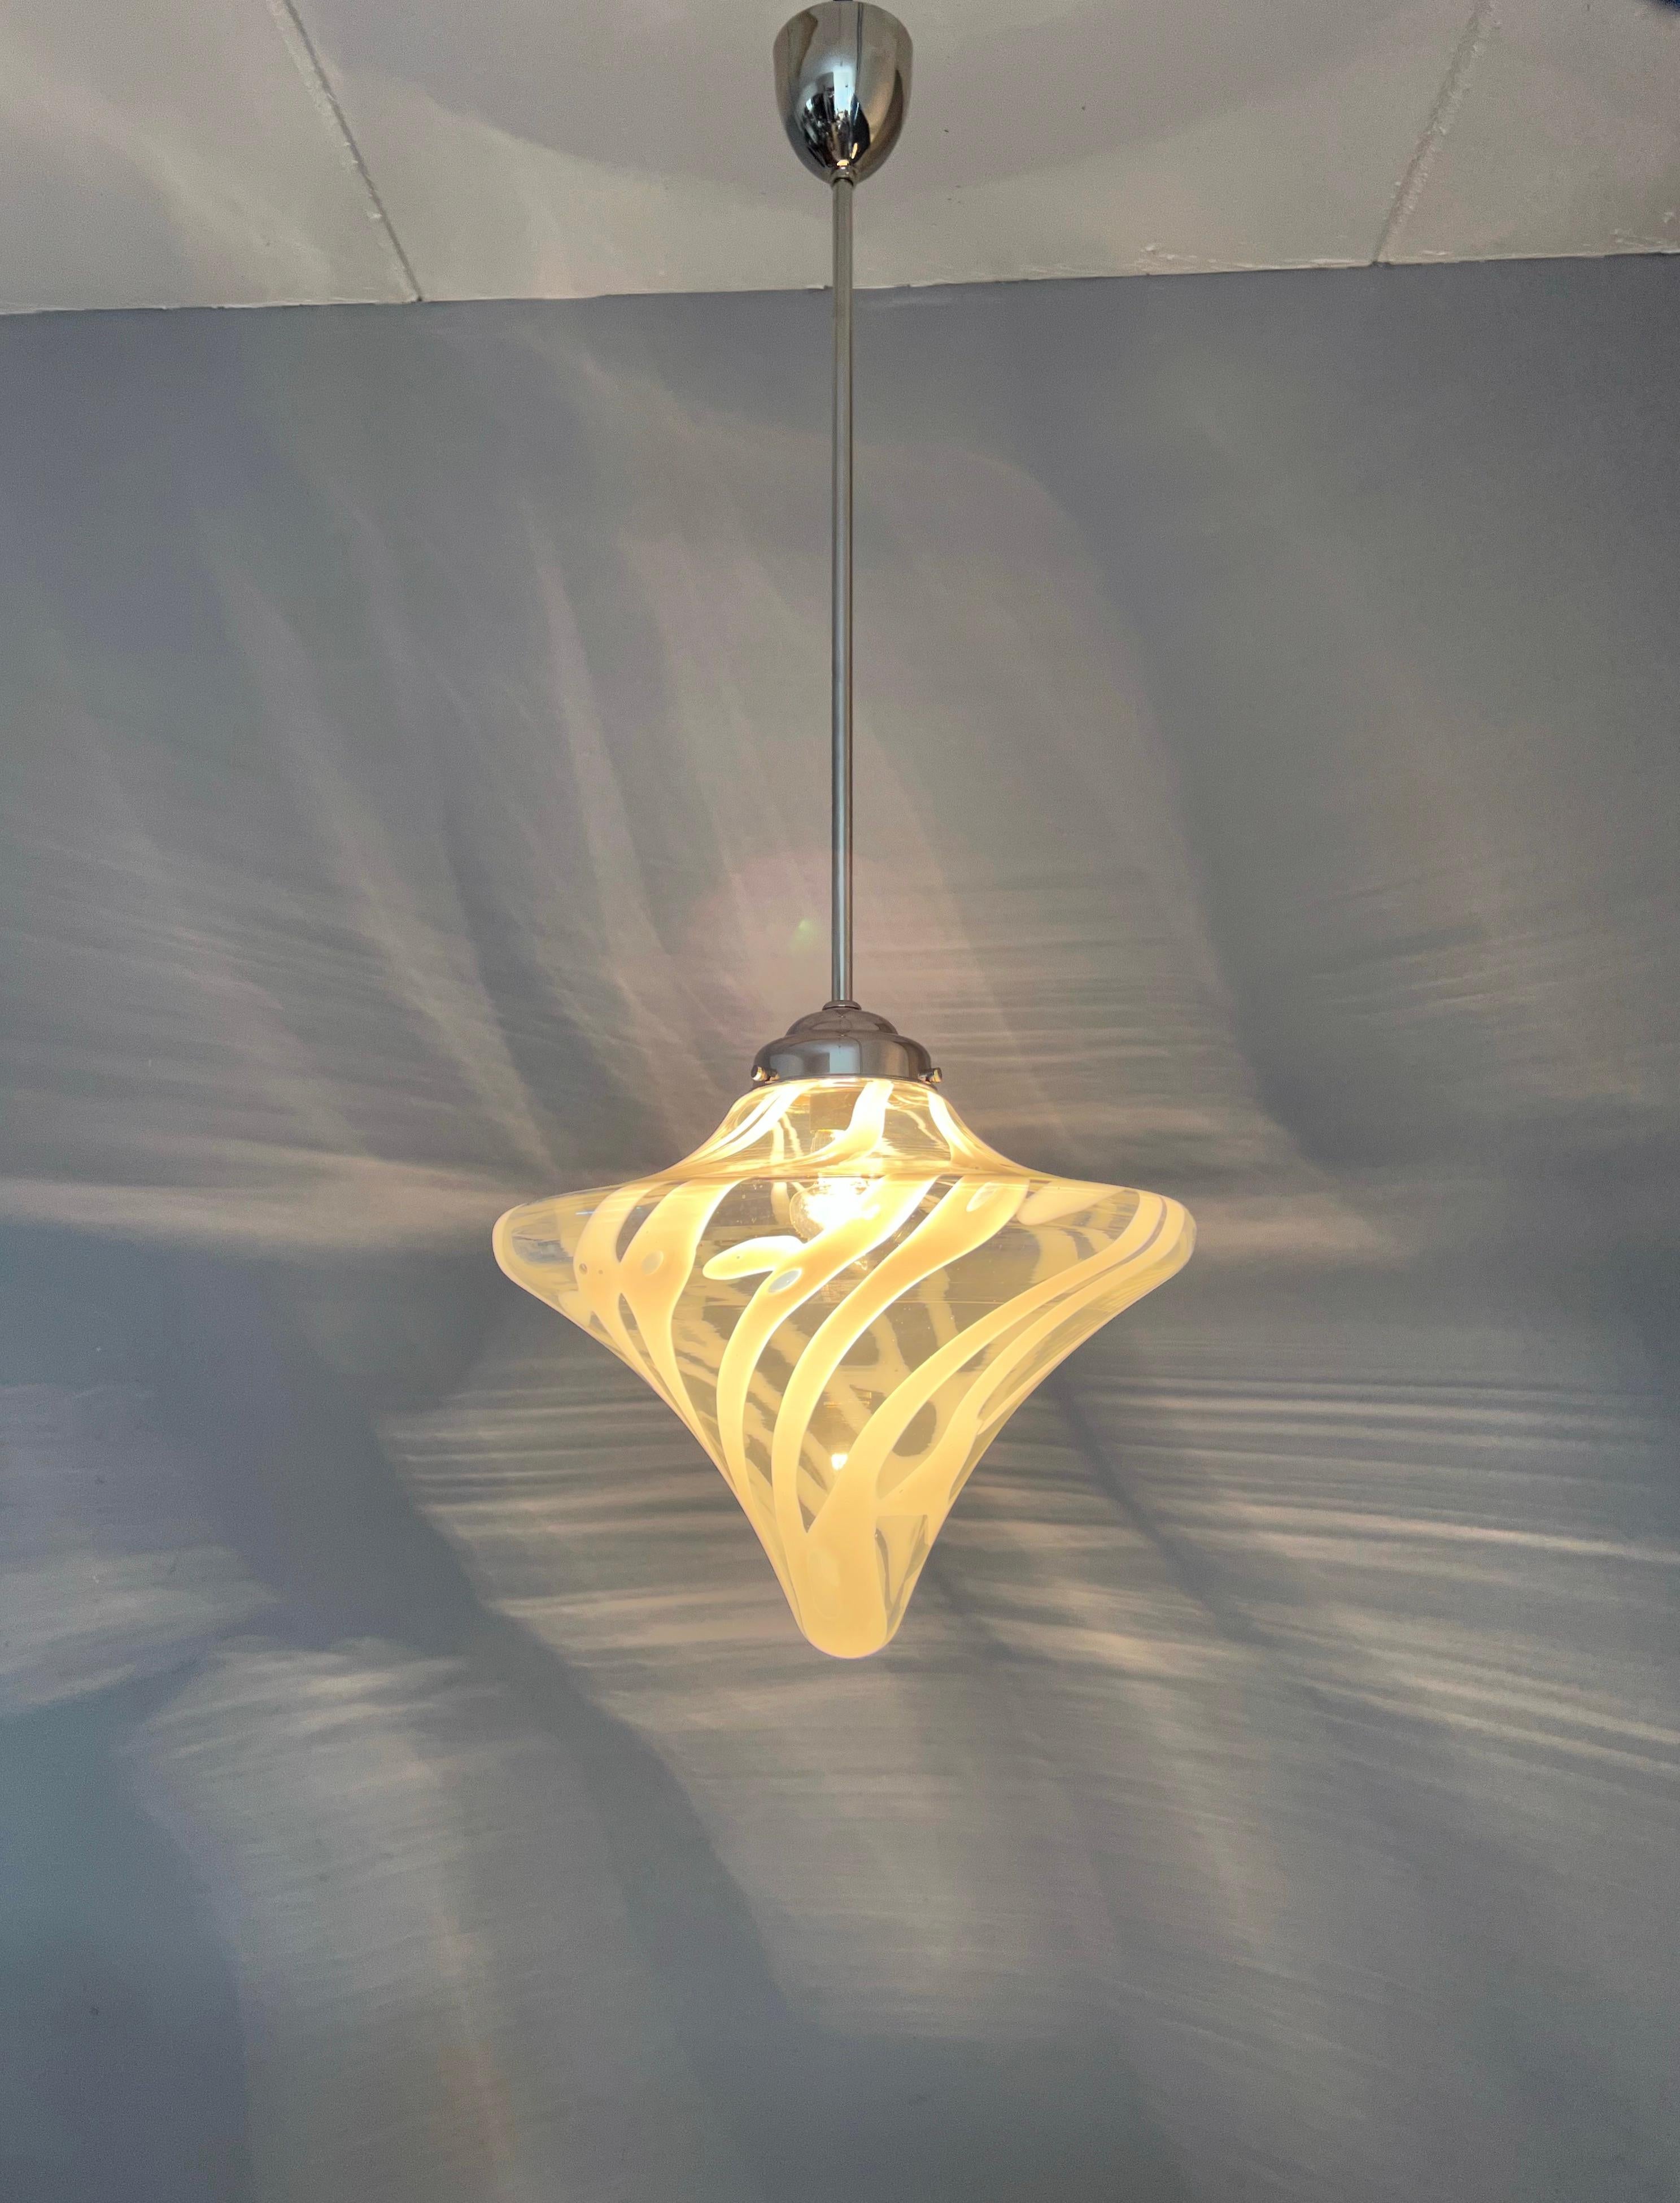 Hand-Crafted Mid-Century Modern Tornado Design Murano Clear Glass Art Pendant Light Fixture